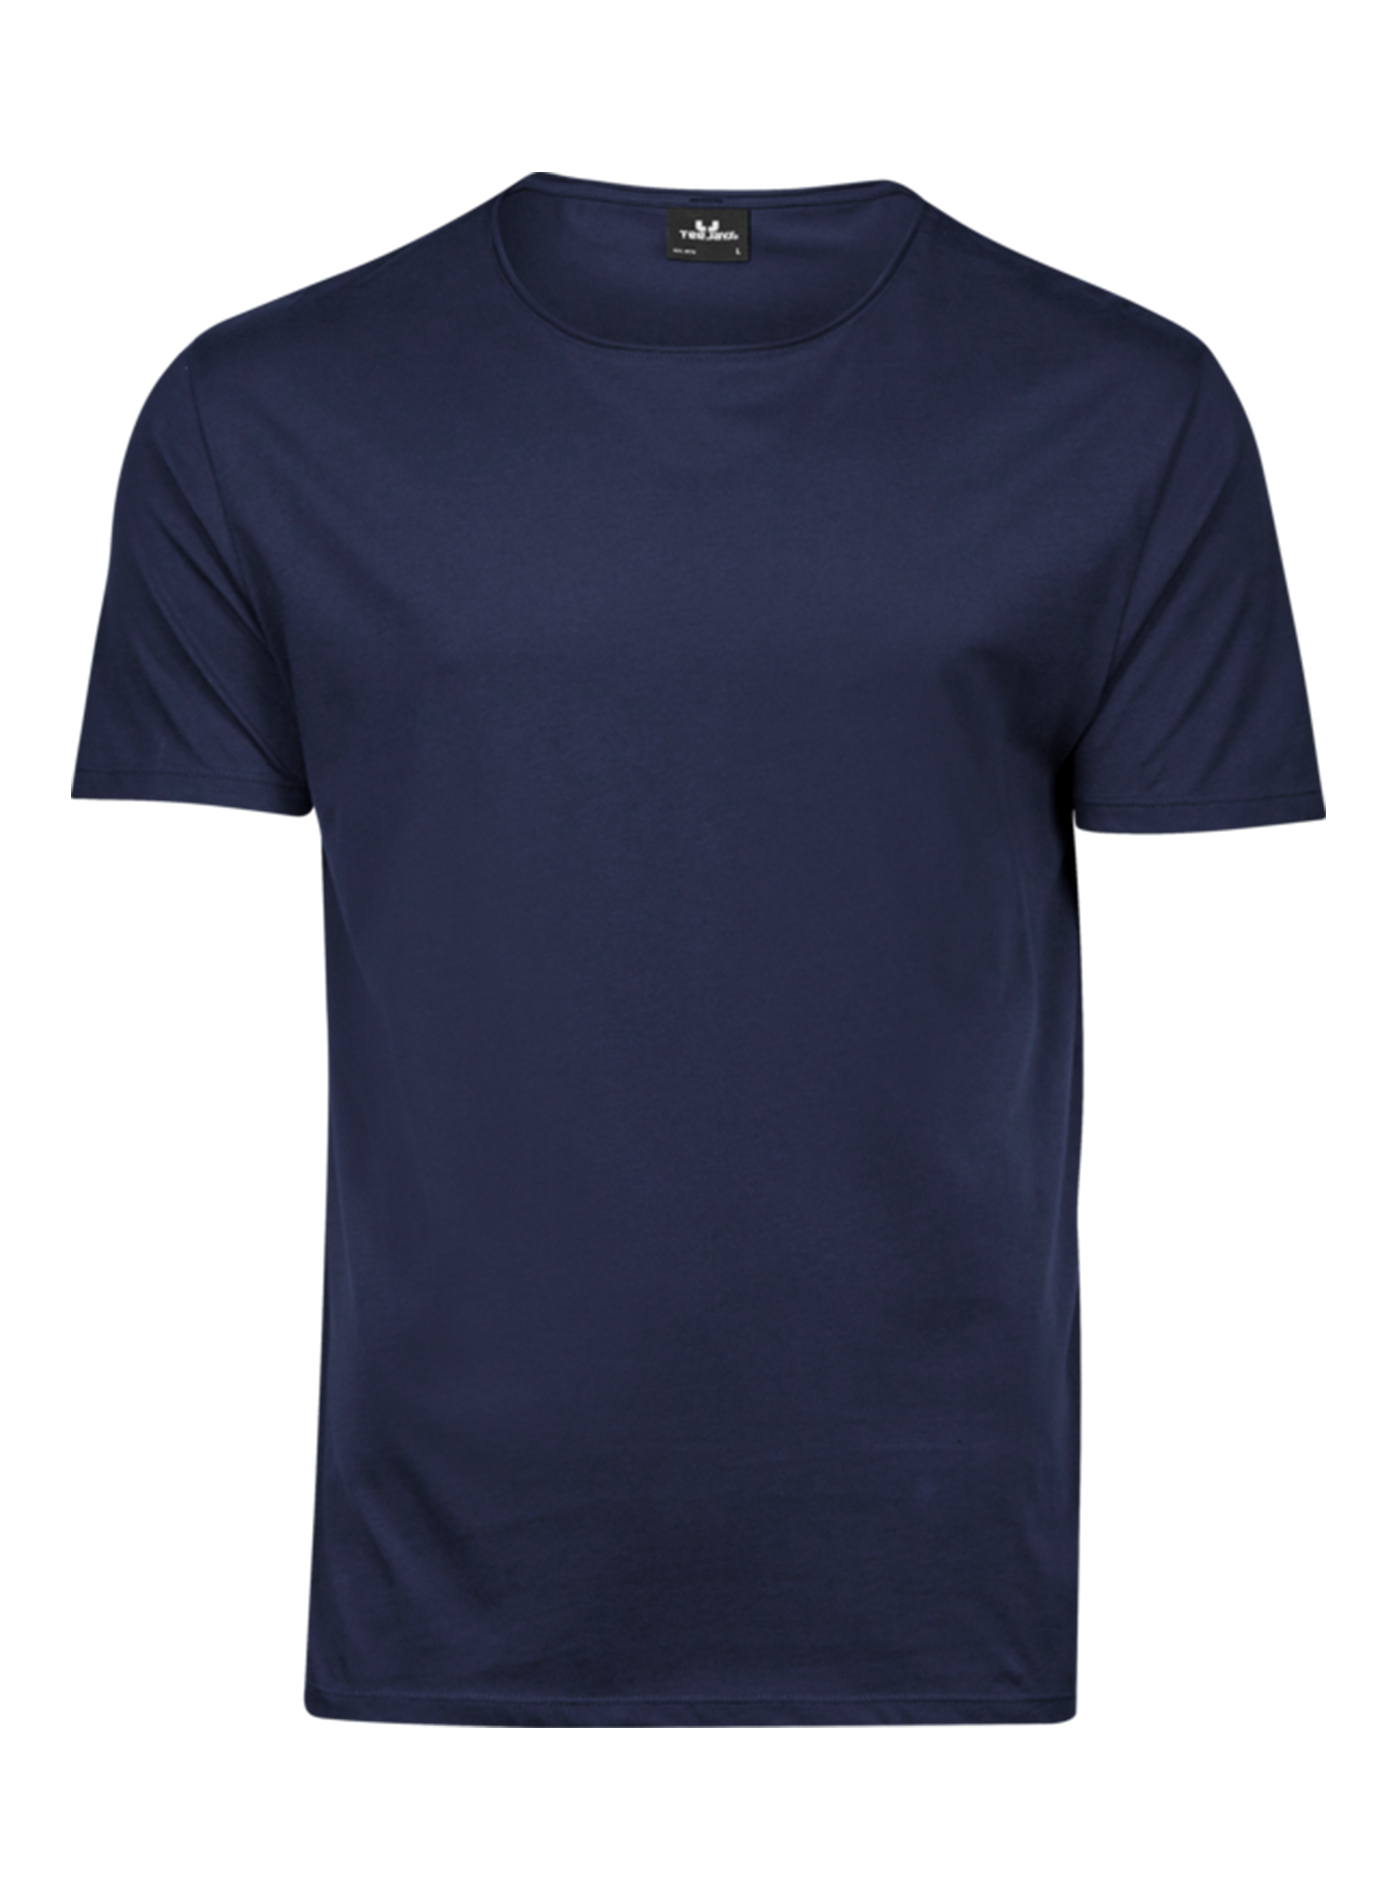 Pánské tričko Raw Tee Jays - Námořní modrá XXL